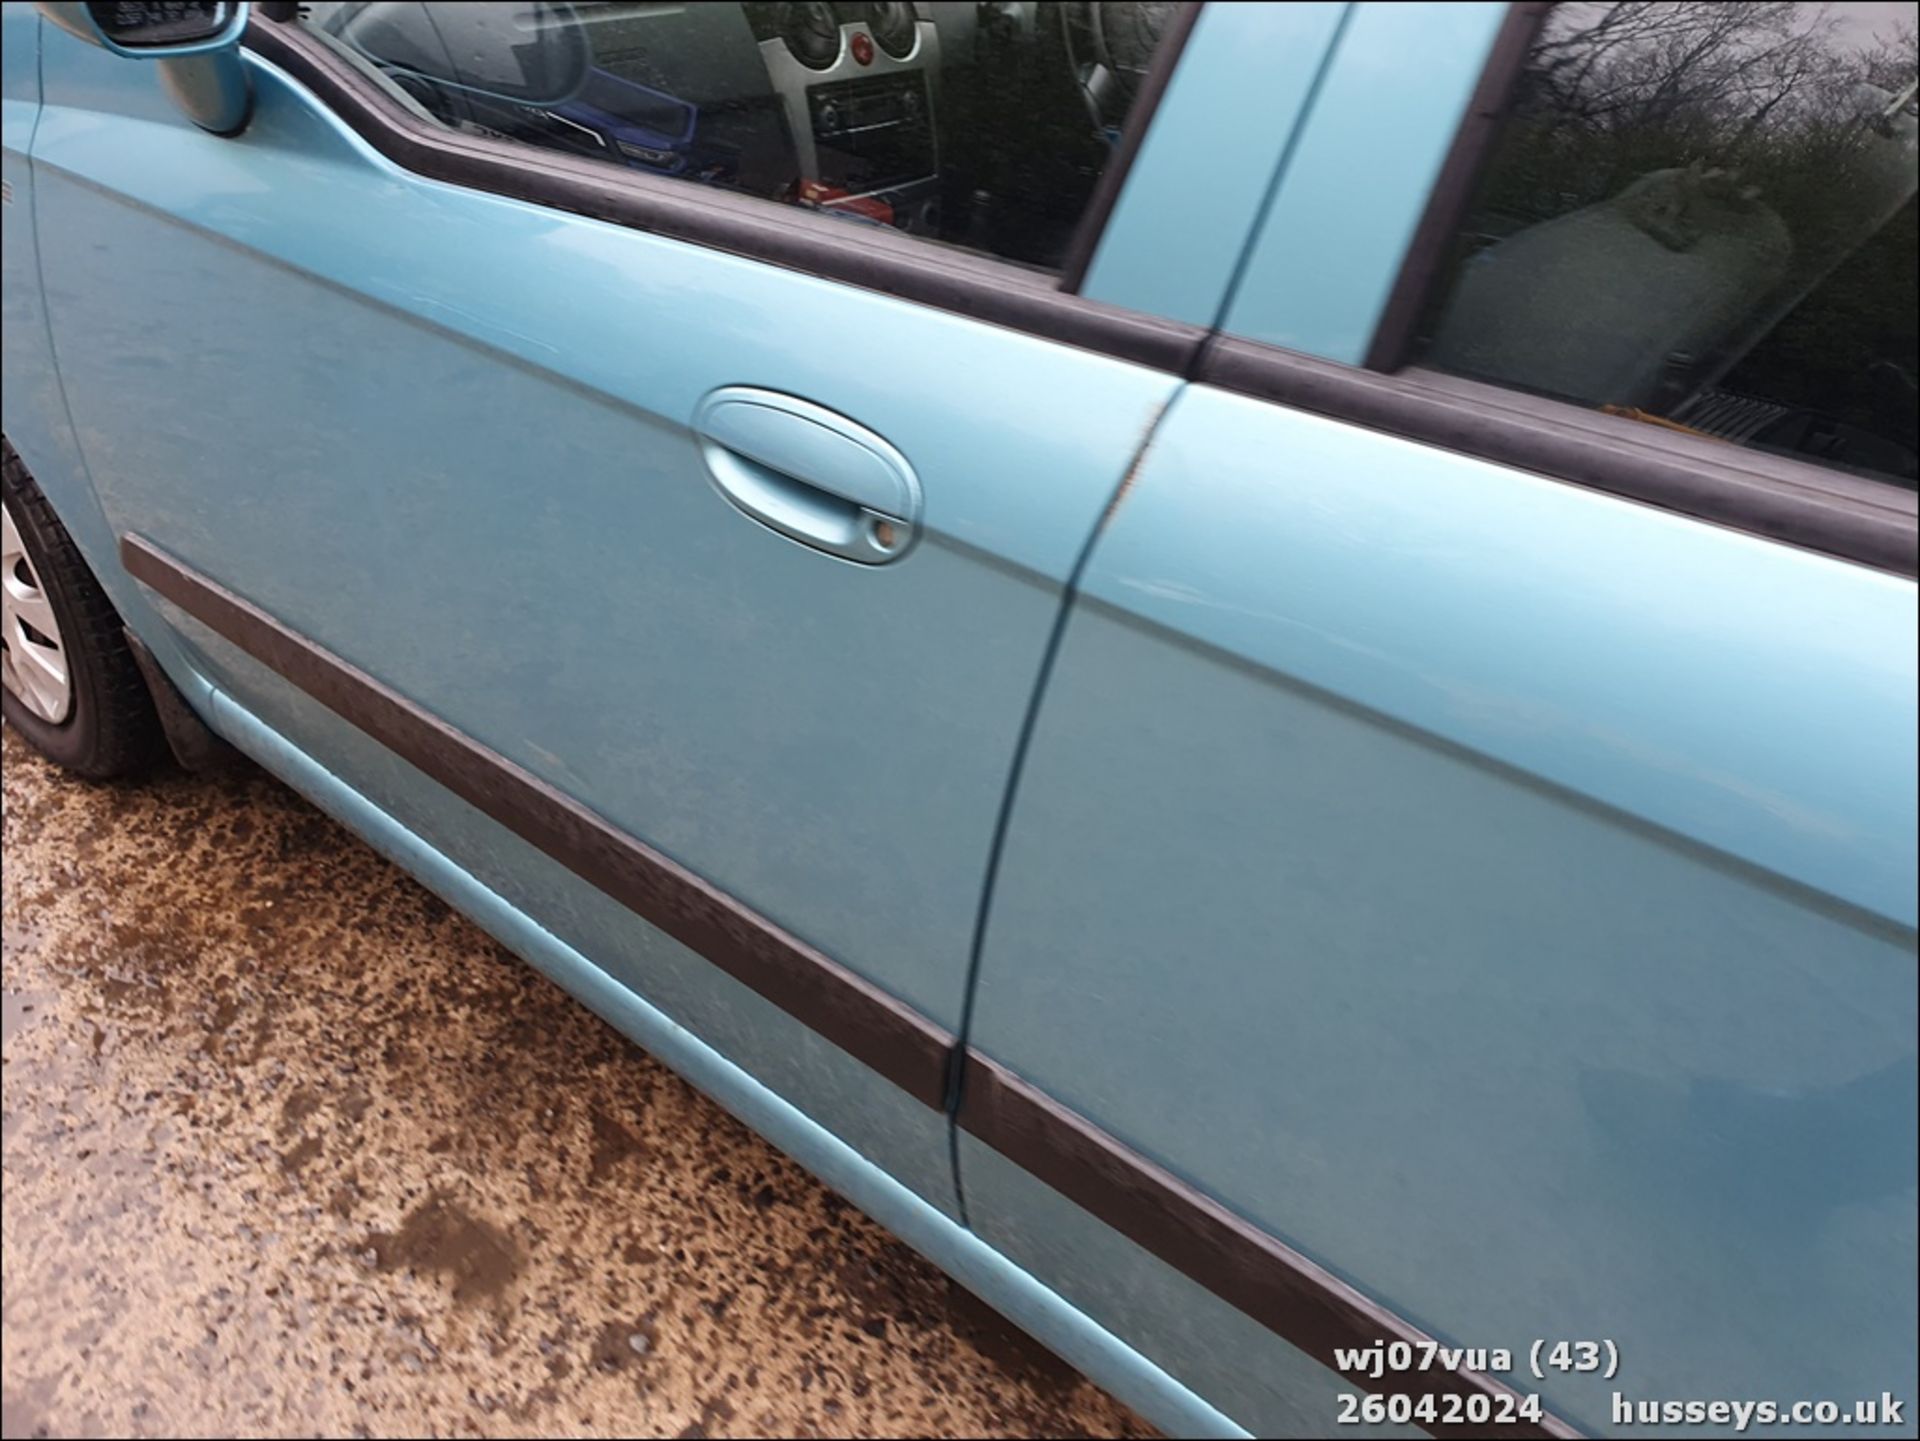 07/07 CHEVROLET MATIZ SE AUTO - 796cc 5dr Hatchback (Blue, 36k) - Image 44 of 56